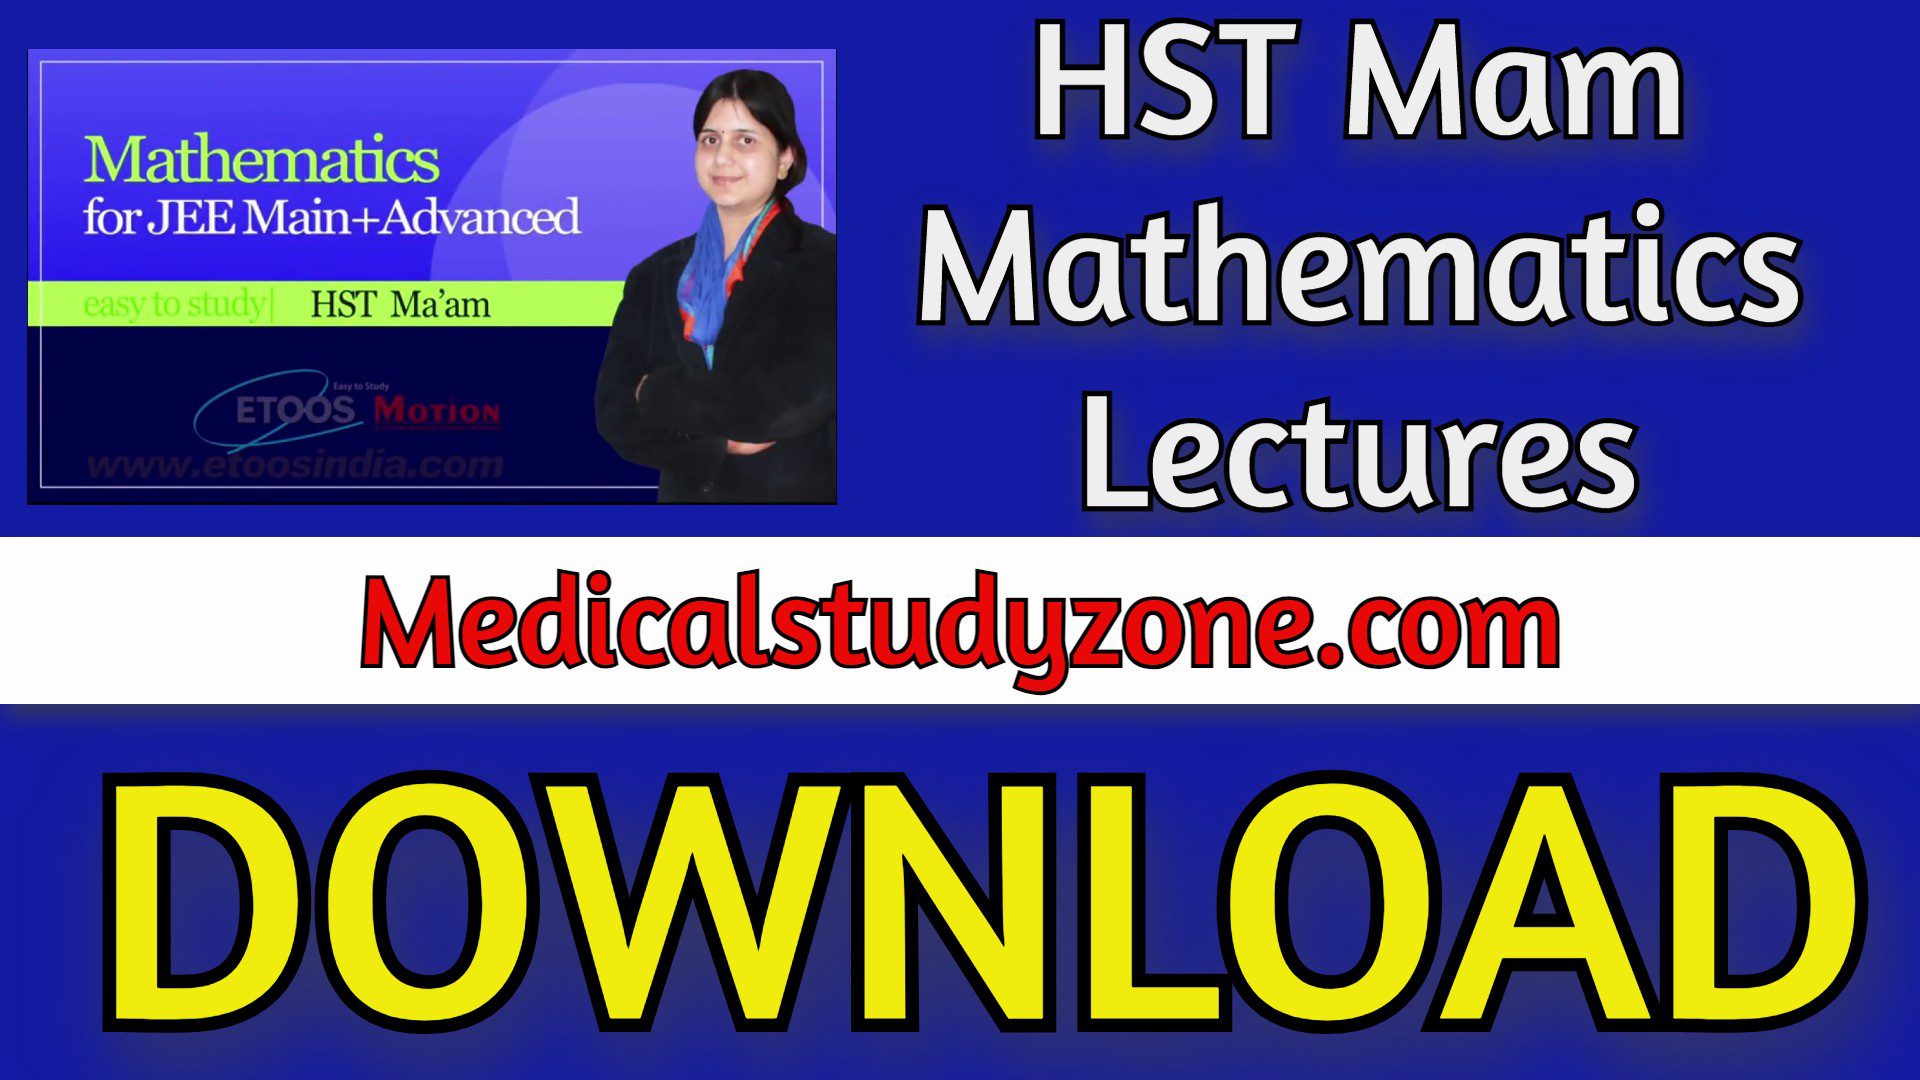 Download Etoos India HST Mam Mathematics Lectures 2021 Free